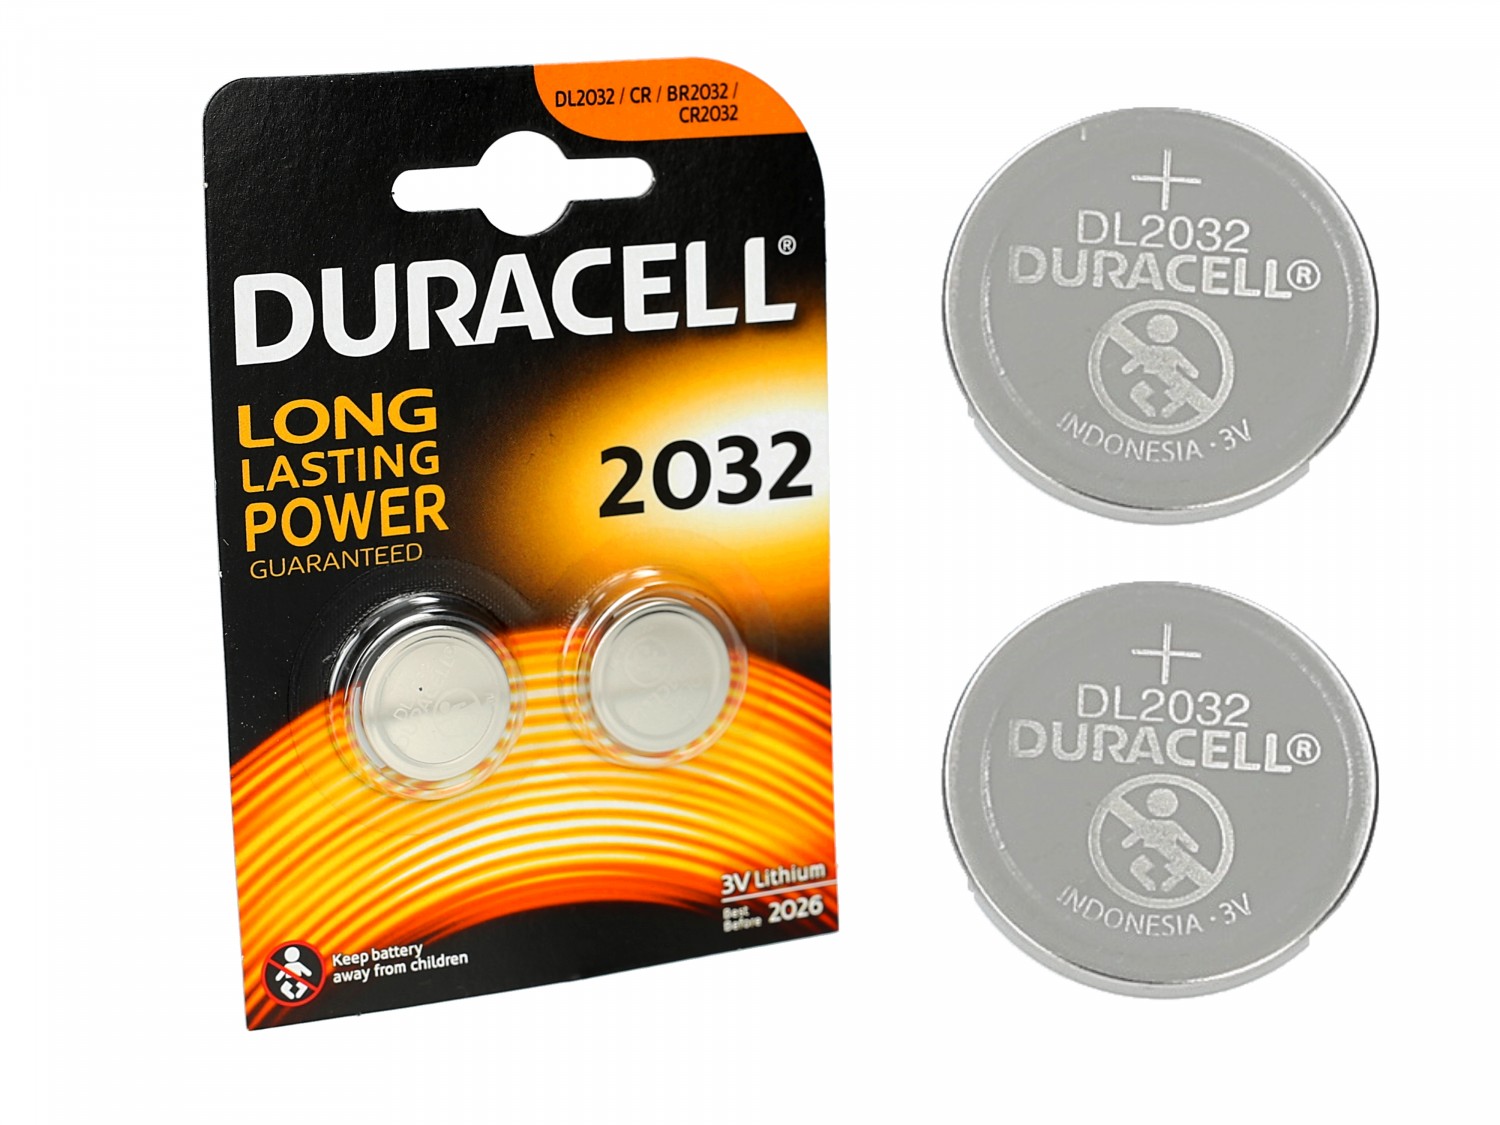 Cr2032 batteries. Батарейка Duracell cr2032. DL/CR 2032 батарейка Duracell. Элемент питания Duracell cr2032-2bl. Батарейка Duracell dl2032 bl2 4967.